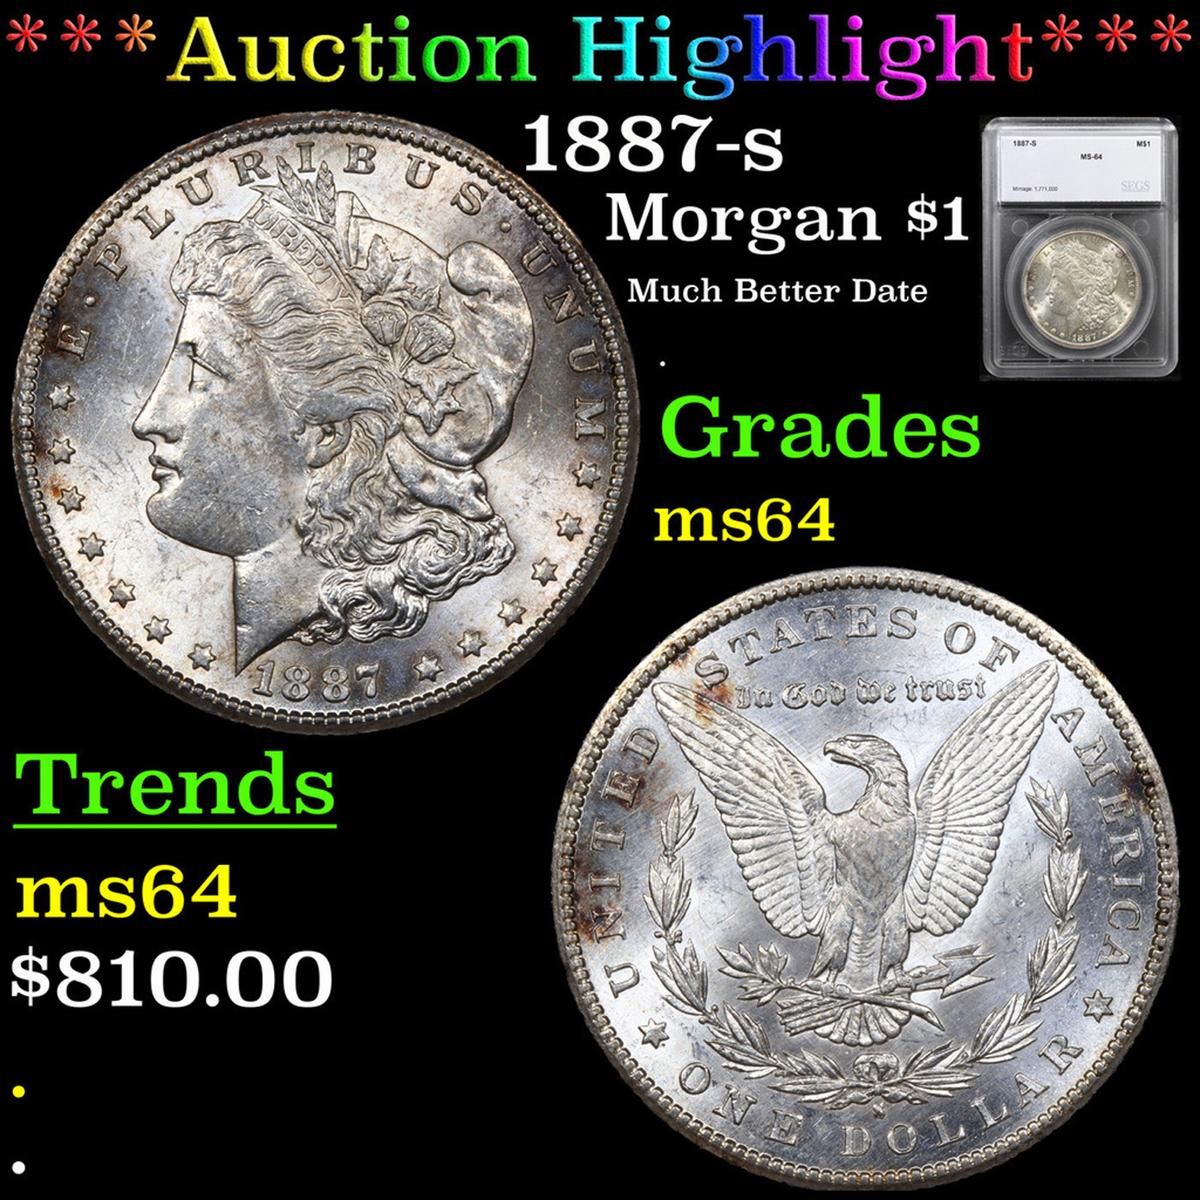 ***Auction Highlight*** 1887-s Morgan Dollar 1 Graded ms64 By SEGS (fc)